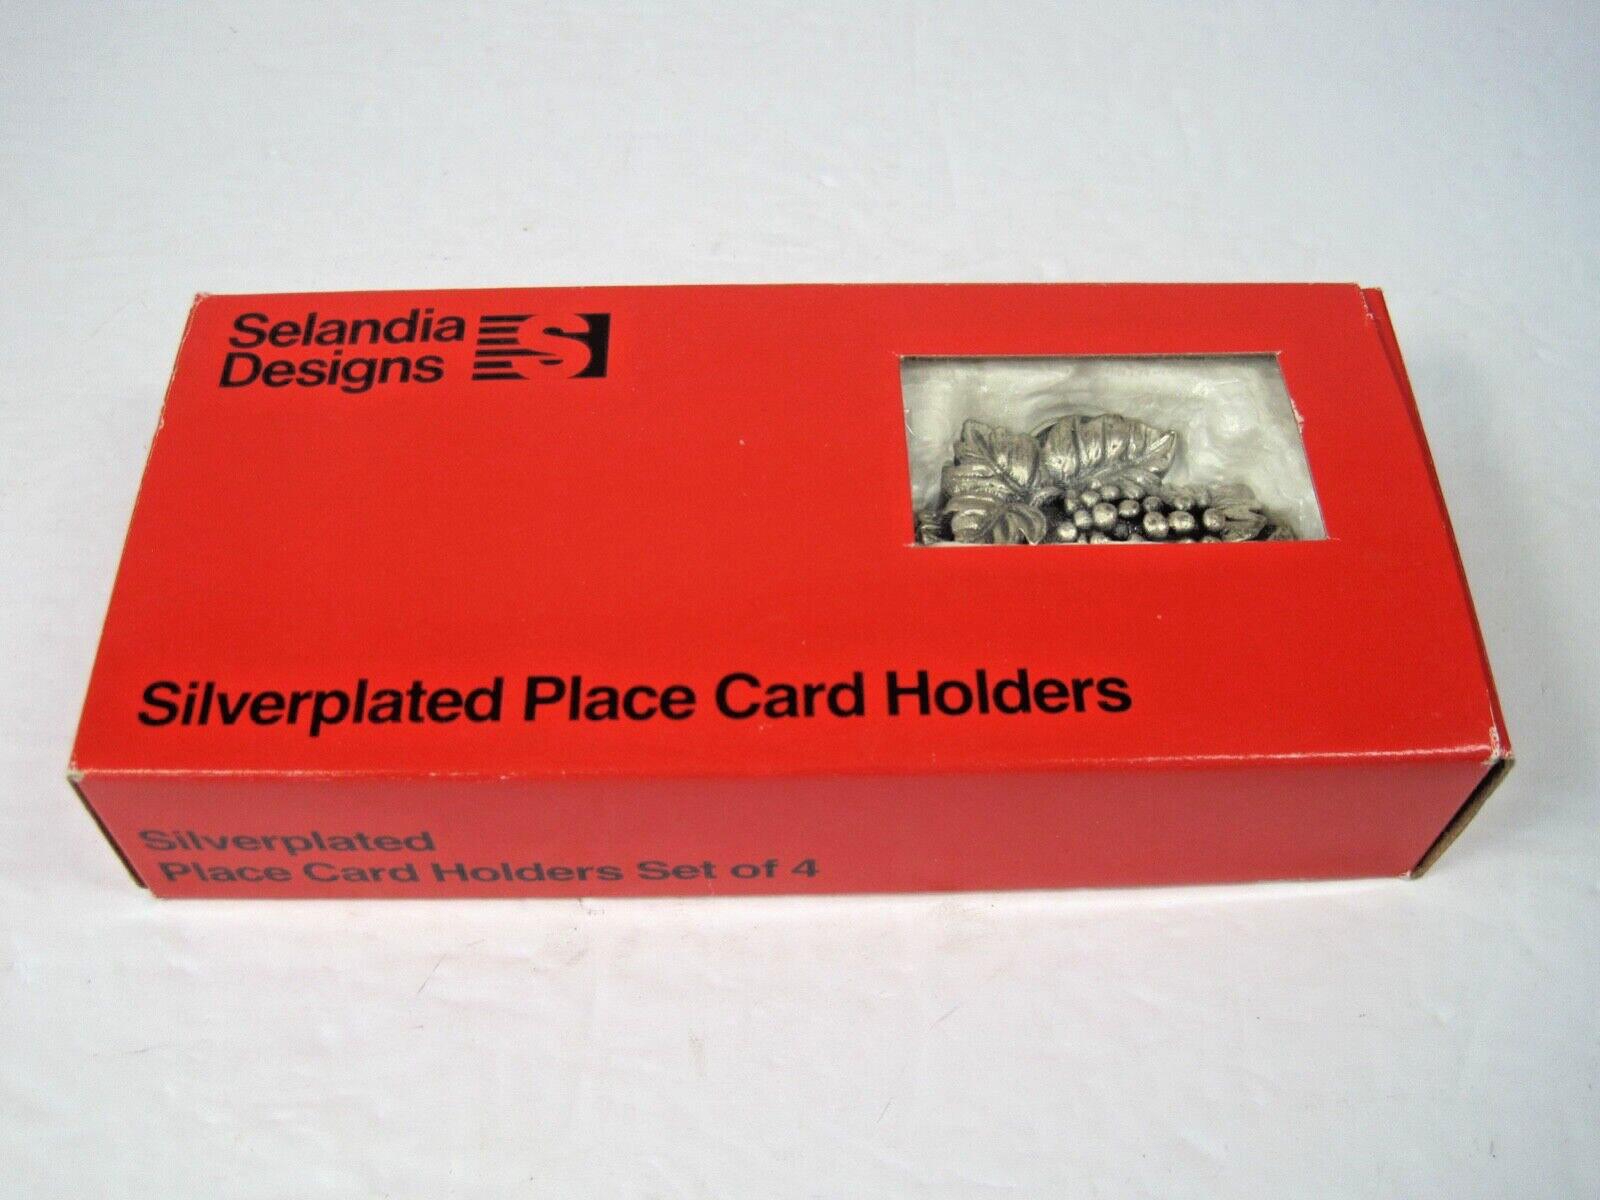 VTG 1983 SELANDIA SILVERPLATED PLACE CARD HOLDERS GRAPE & LEAF Set Of 4 NEW